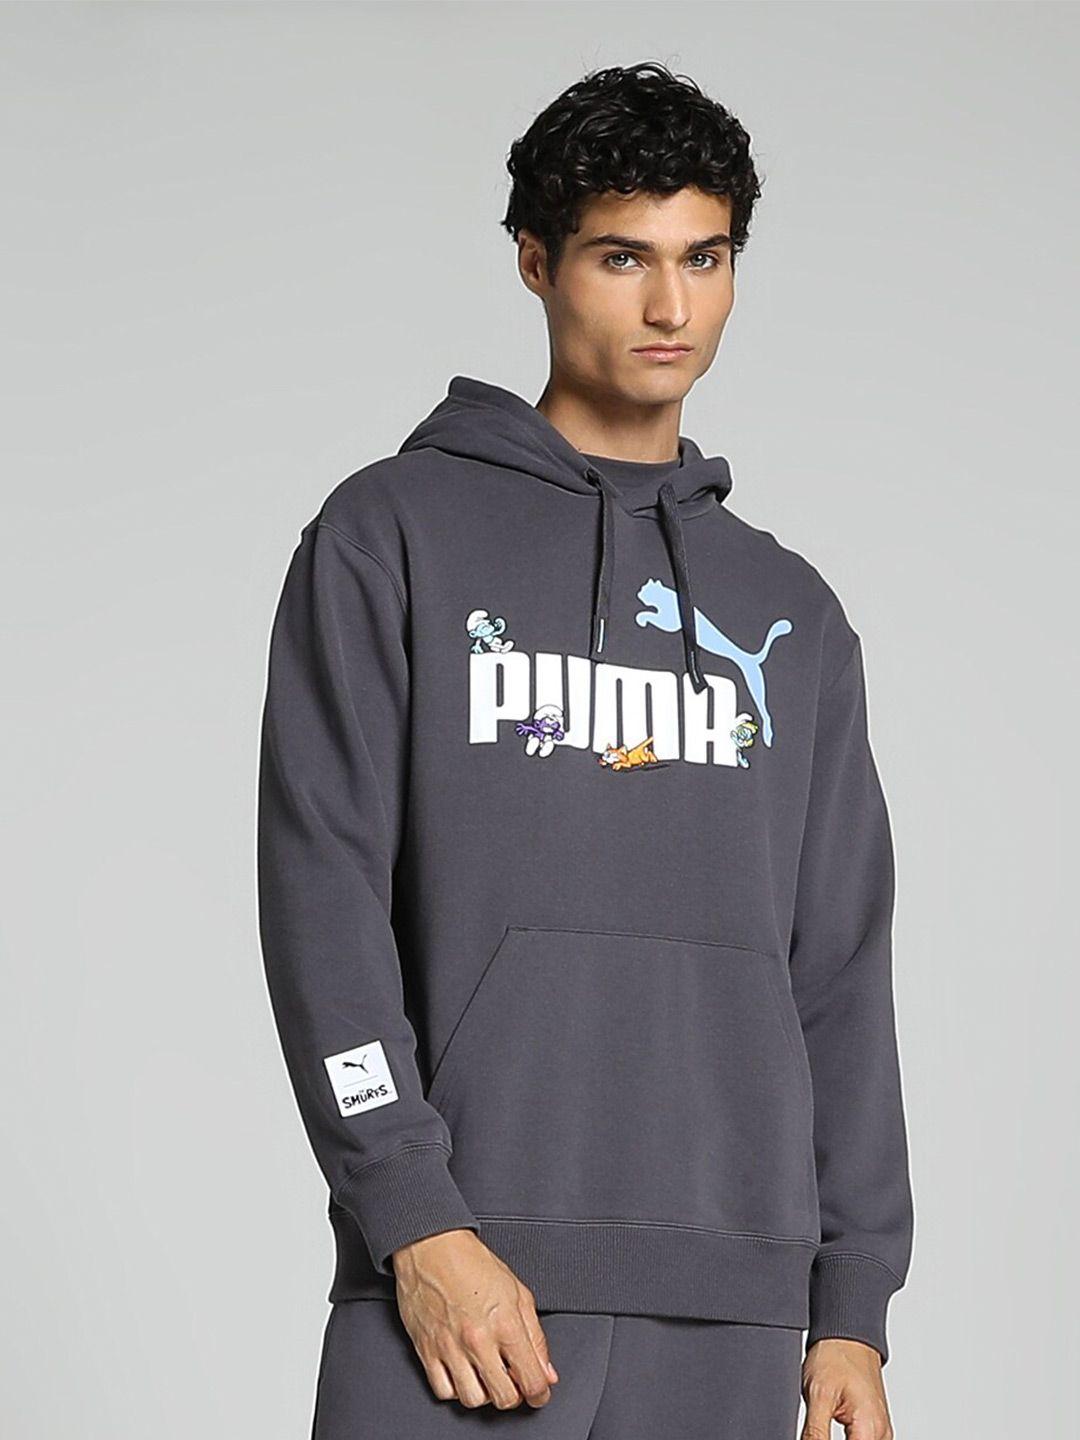 puma-the-smurfs-logo-printed-detail-hooded-pullover-sweatshirt